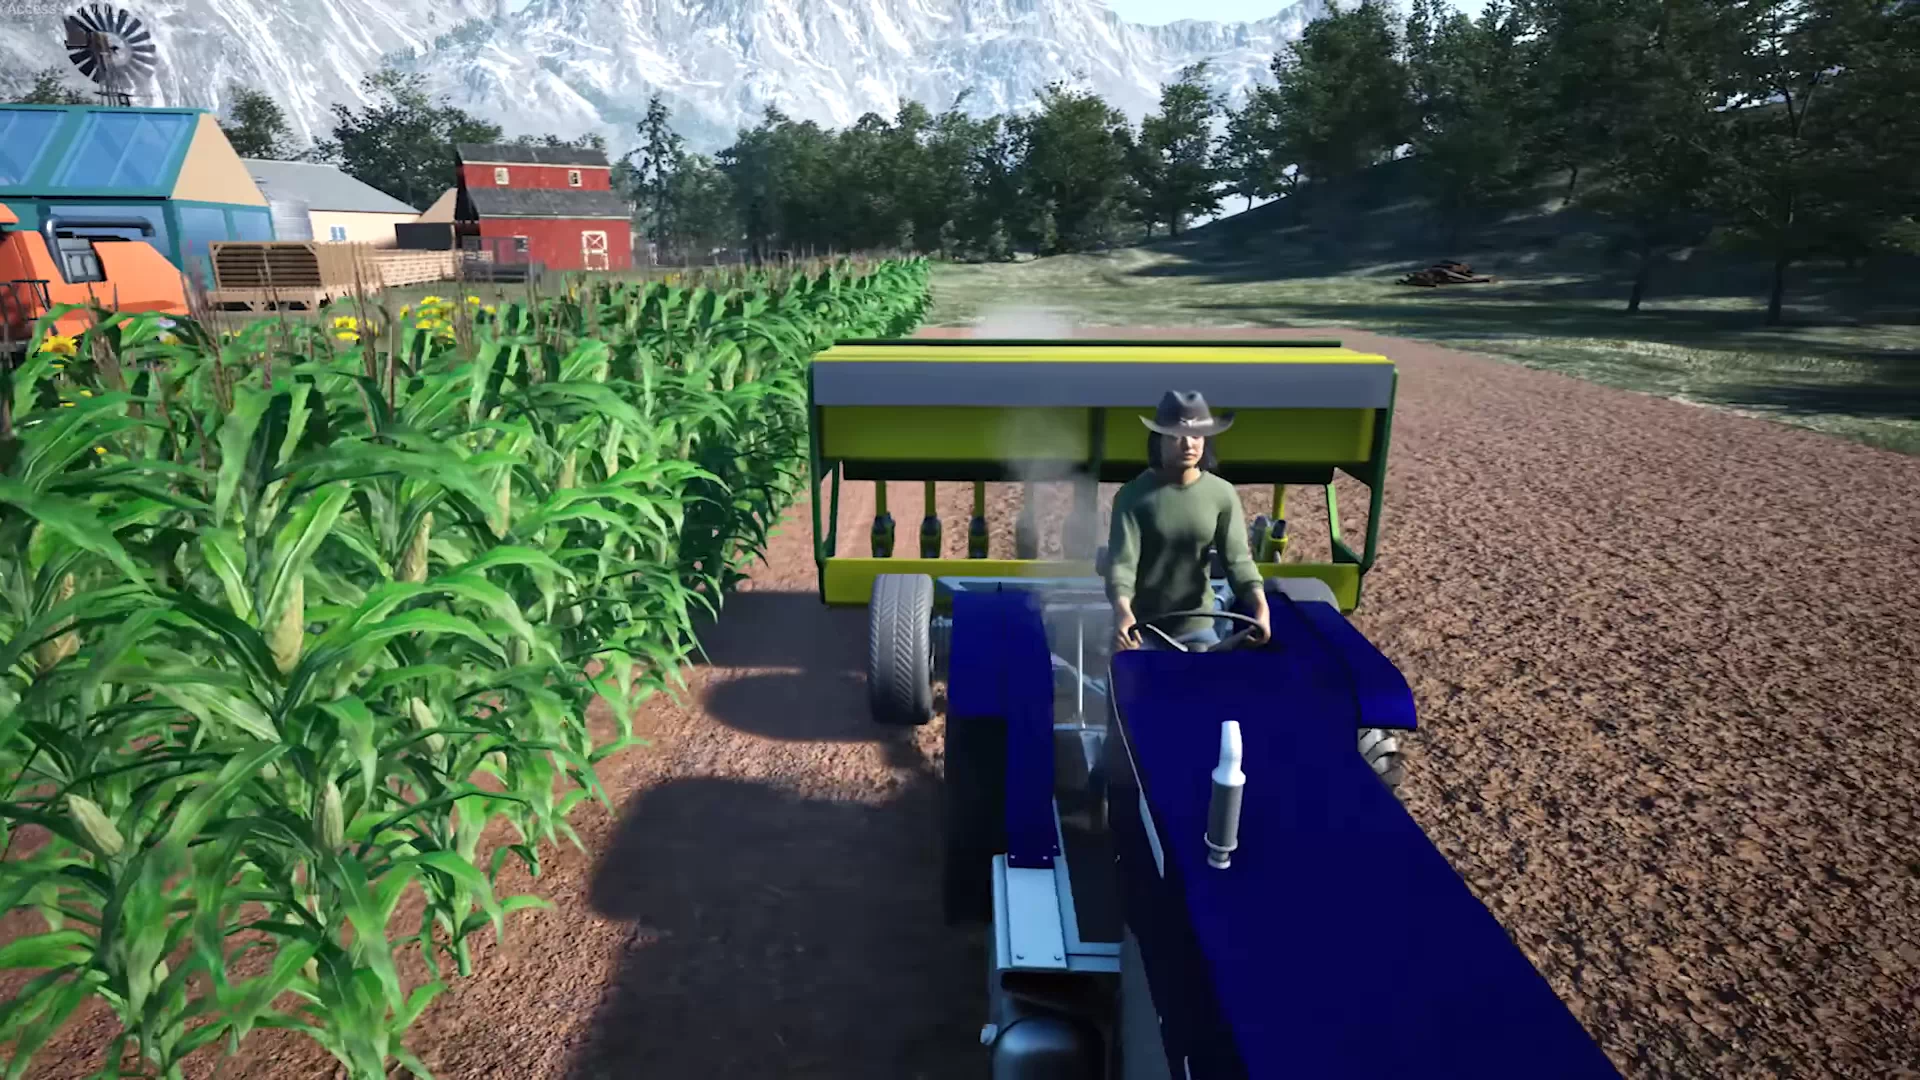 Ranch Simulator - Build, Farm, Hunt Download - GameFabrique